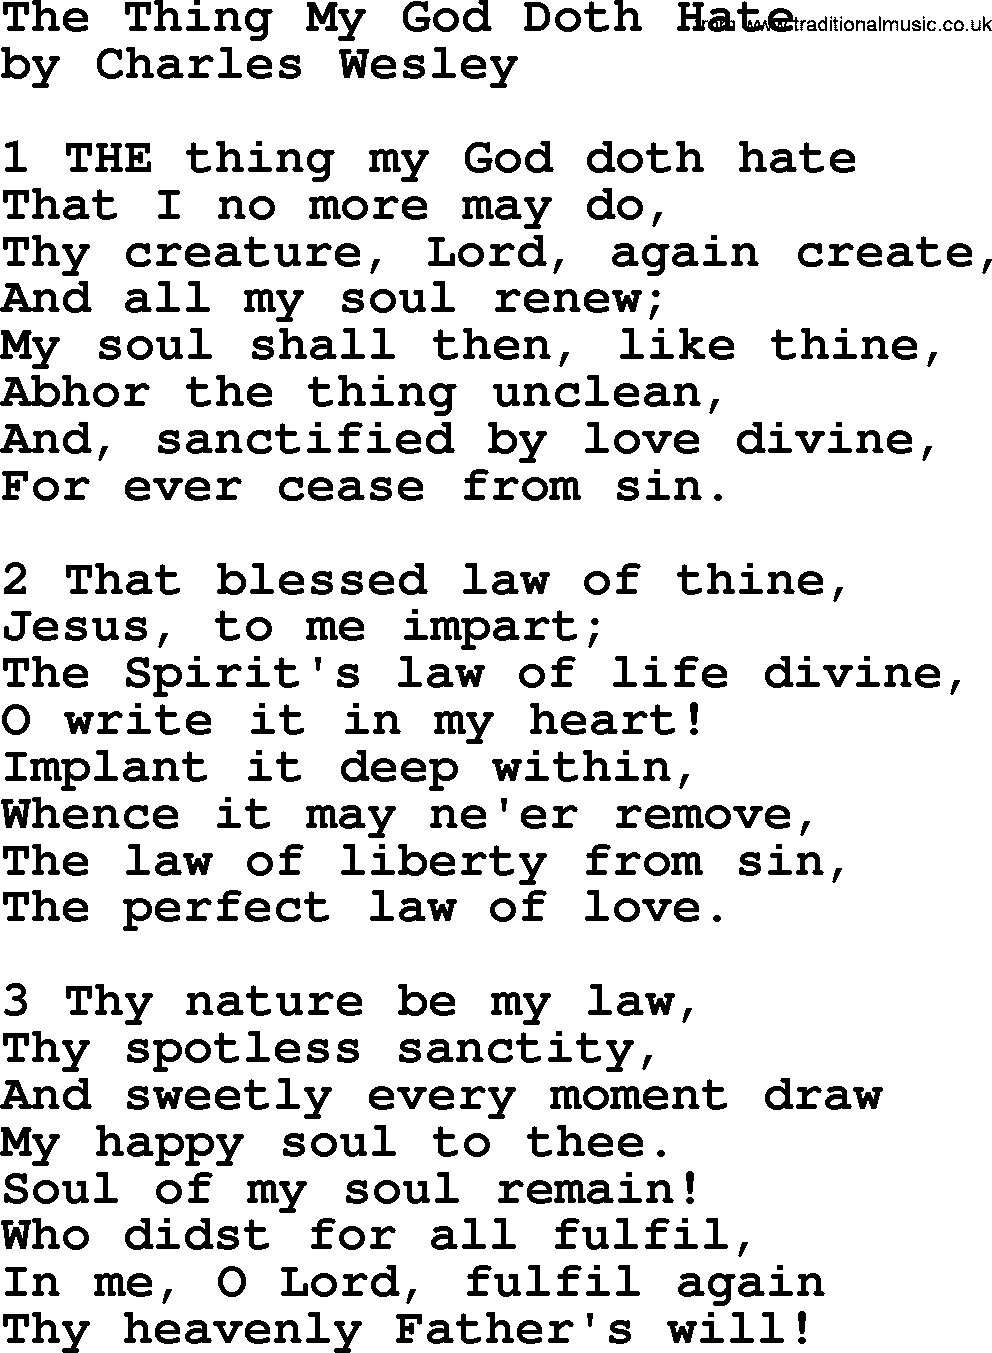 Charles Wesley hymn: The Thing My God Doth Hate, lyrics